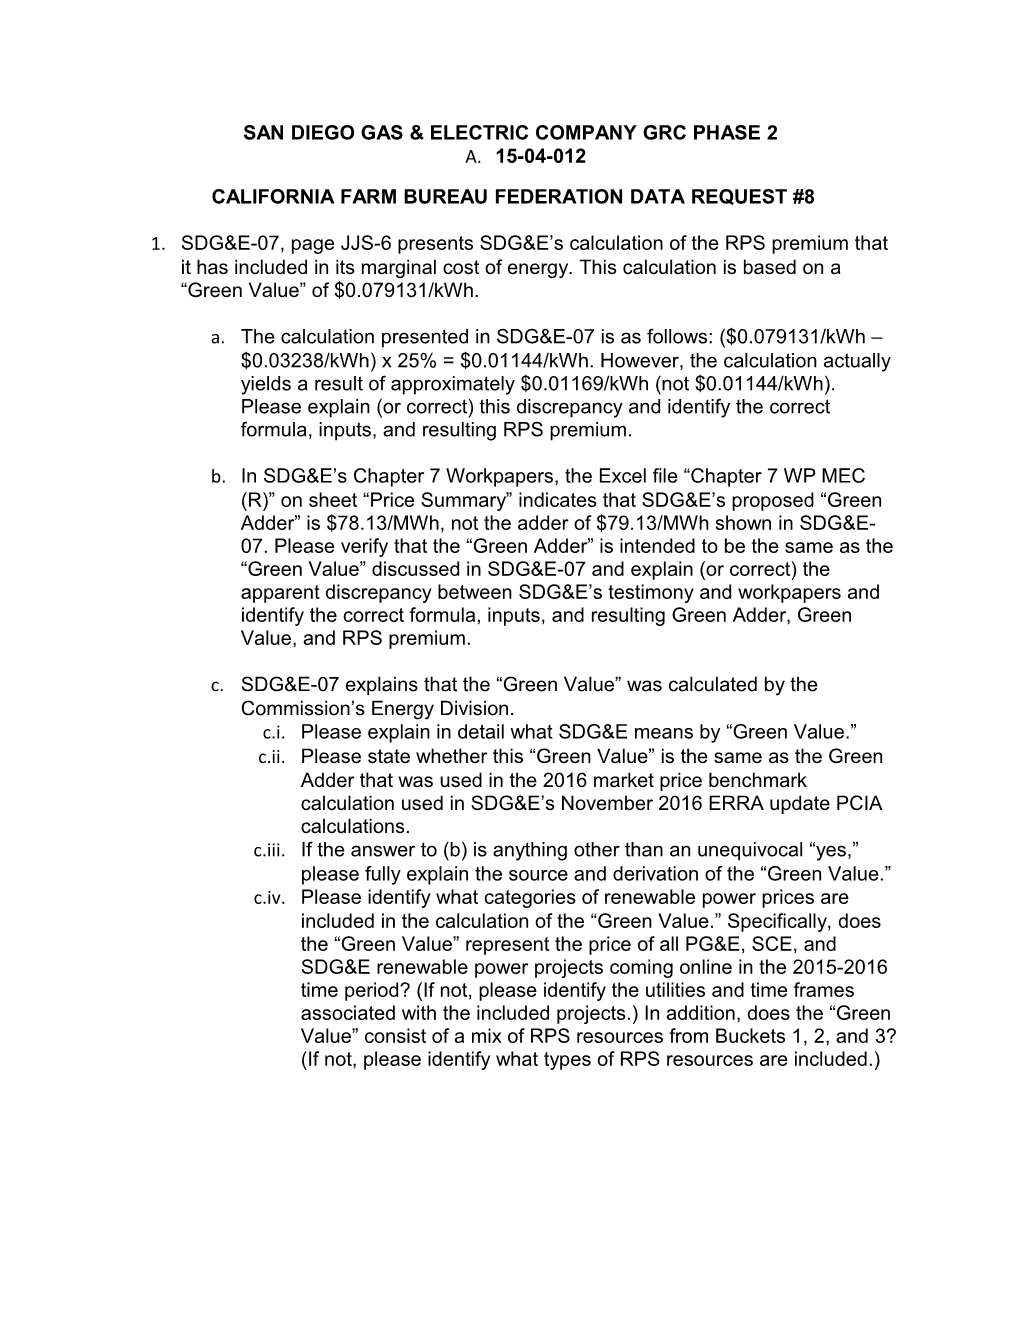 San Diego Gas & Electric Company Grc Phase 2